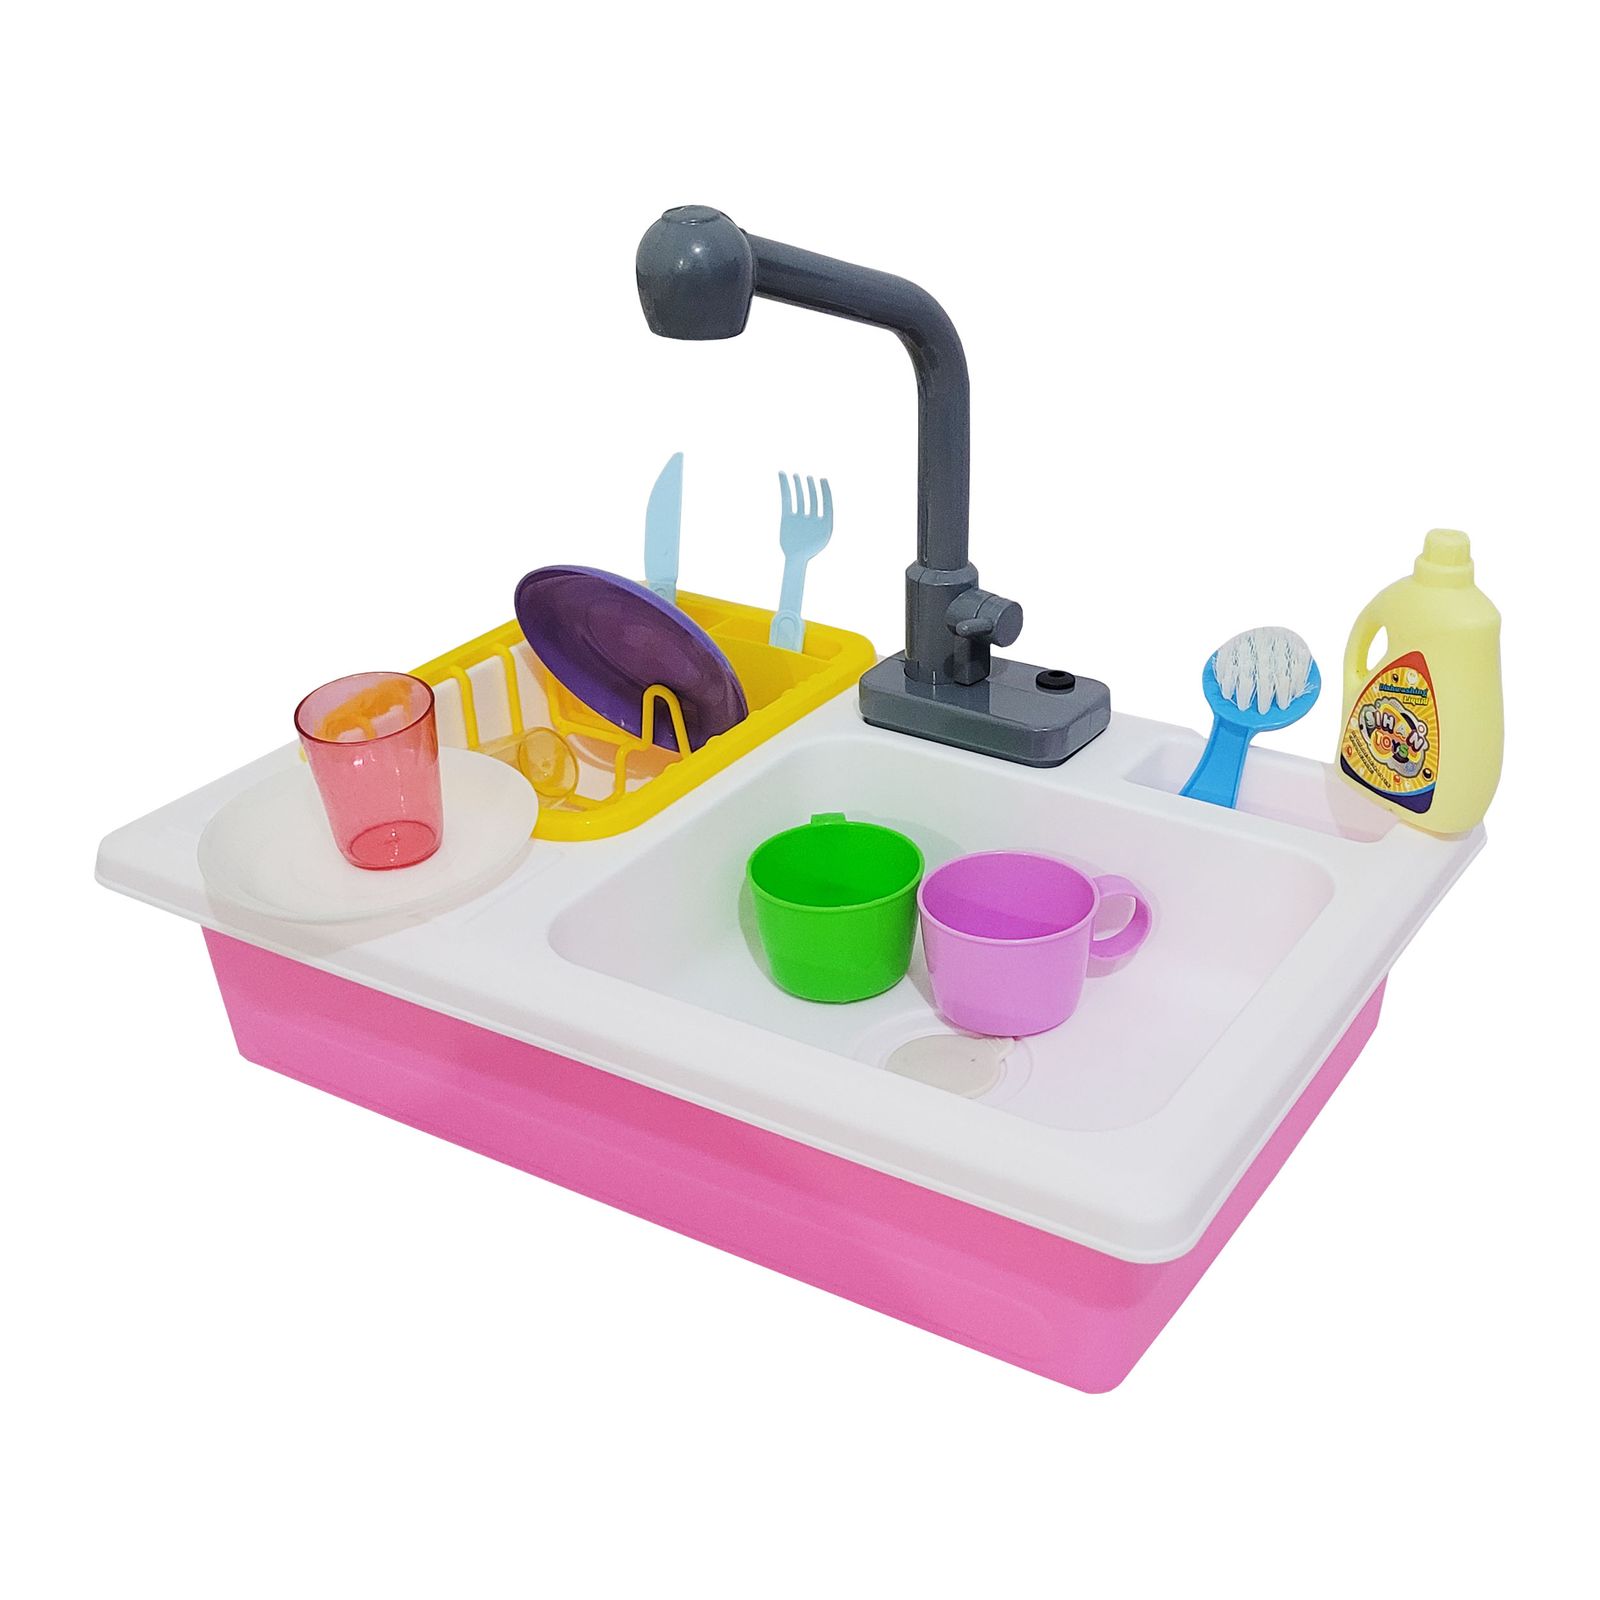 اسباب بازی سینک ظرفشویی مدل Sink ELECTRIC کد 0090877 -  - 1